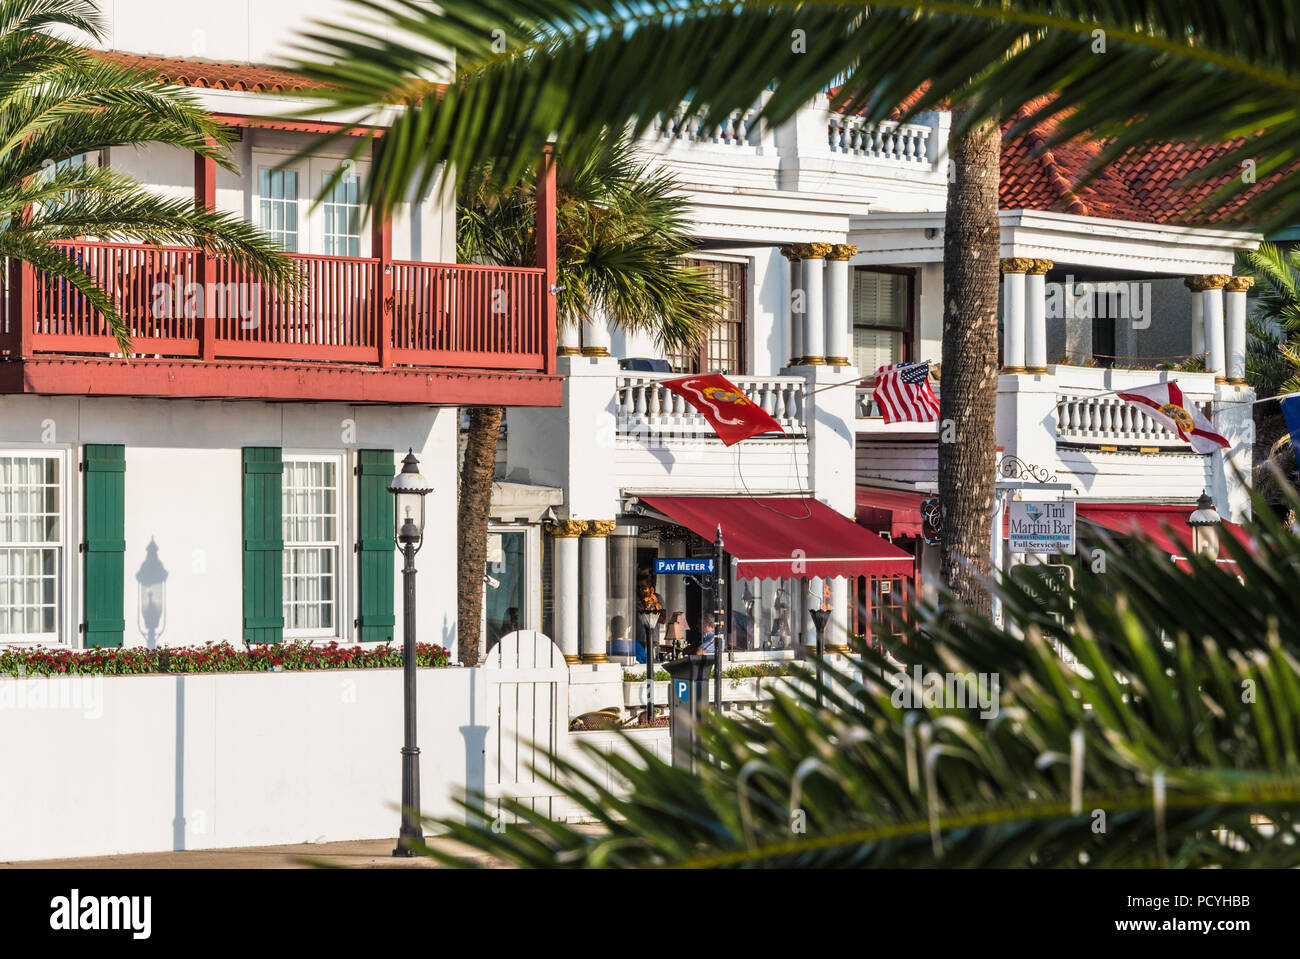 Casablanca Inn and Tini Martini Bar on the Matanzas Bay waterfront along Avenida Menendez in historic St. Augustine, Florida. (USA) Stock Photo